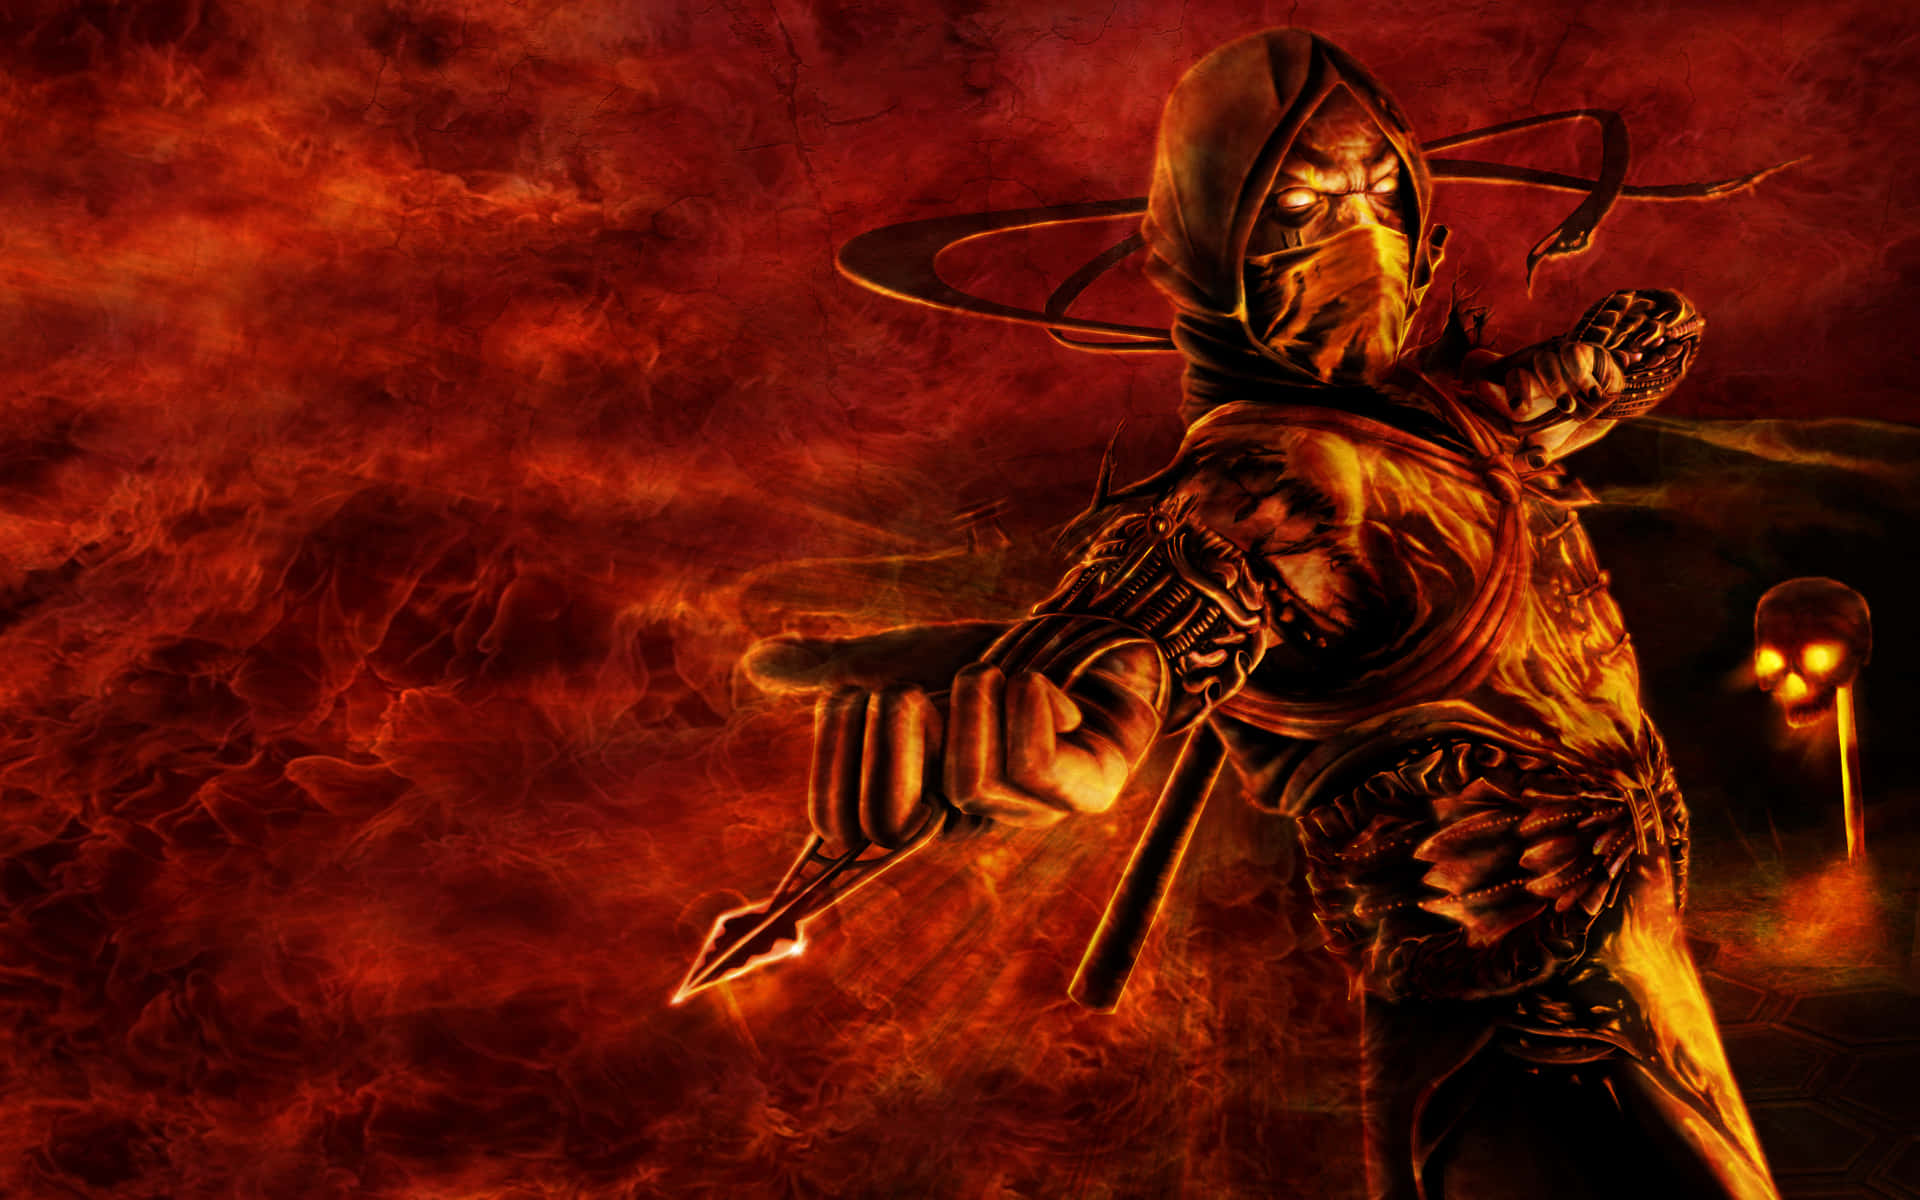 Erlebeden Legendären Charakter Scorpion Aus Mortal Kombat In All Seiner Pracht. Wallpaper